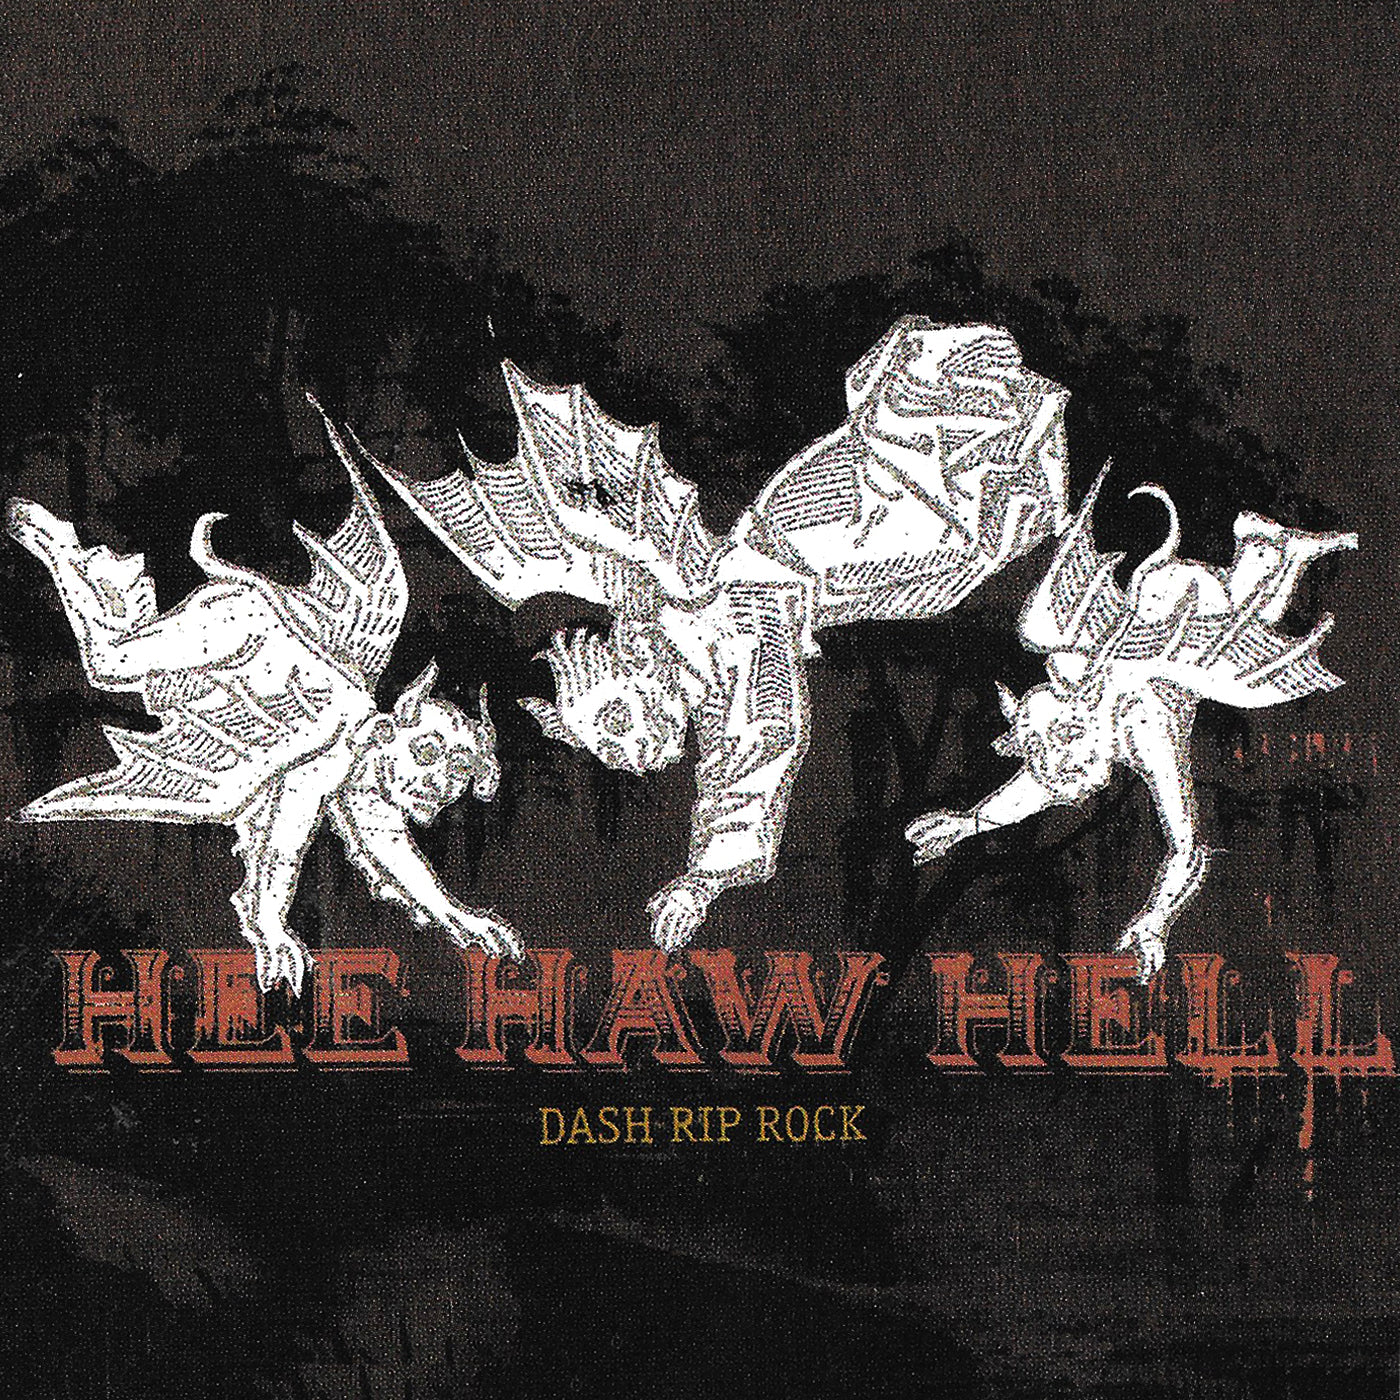 v372 - Dash Rip Rock - "Hee Haw Hell"